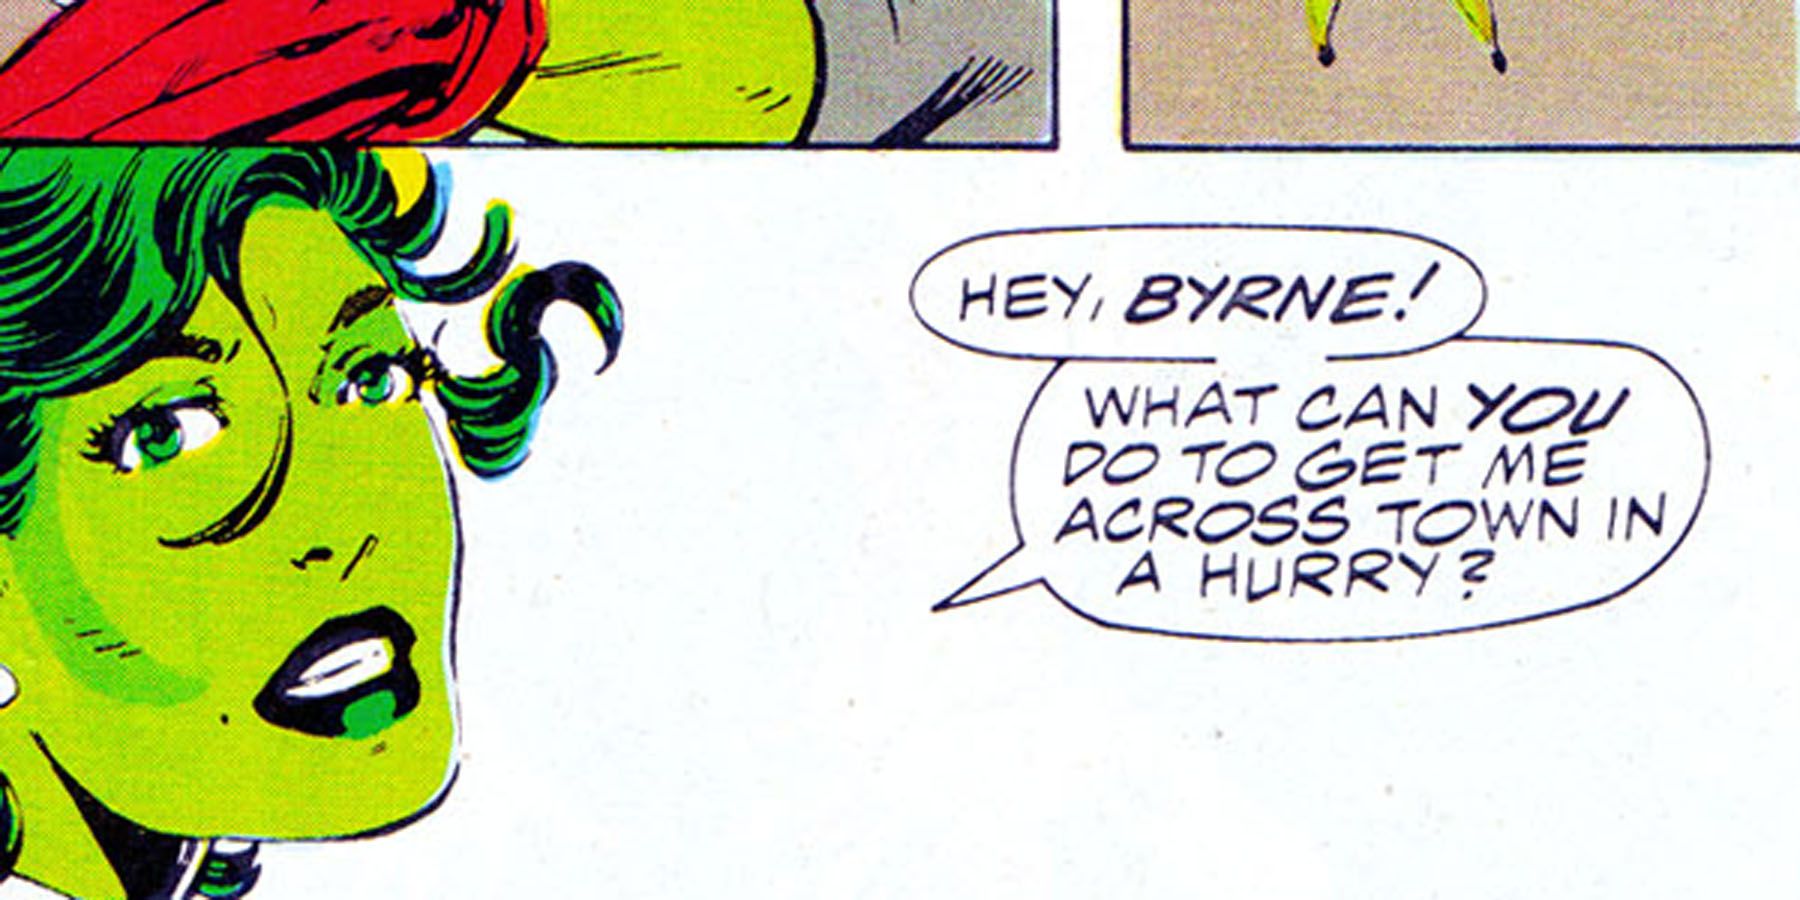 She-Hulk breaks the fourth wall in Marvel Comics